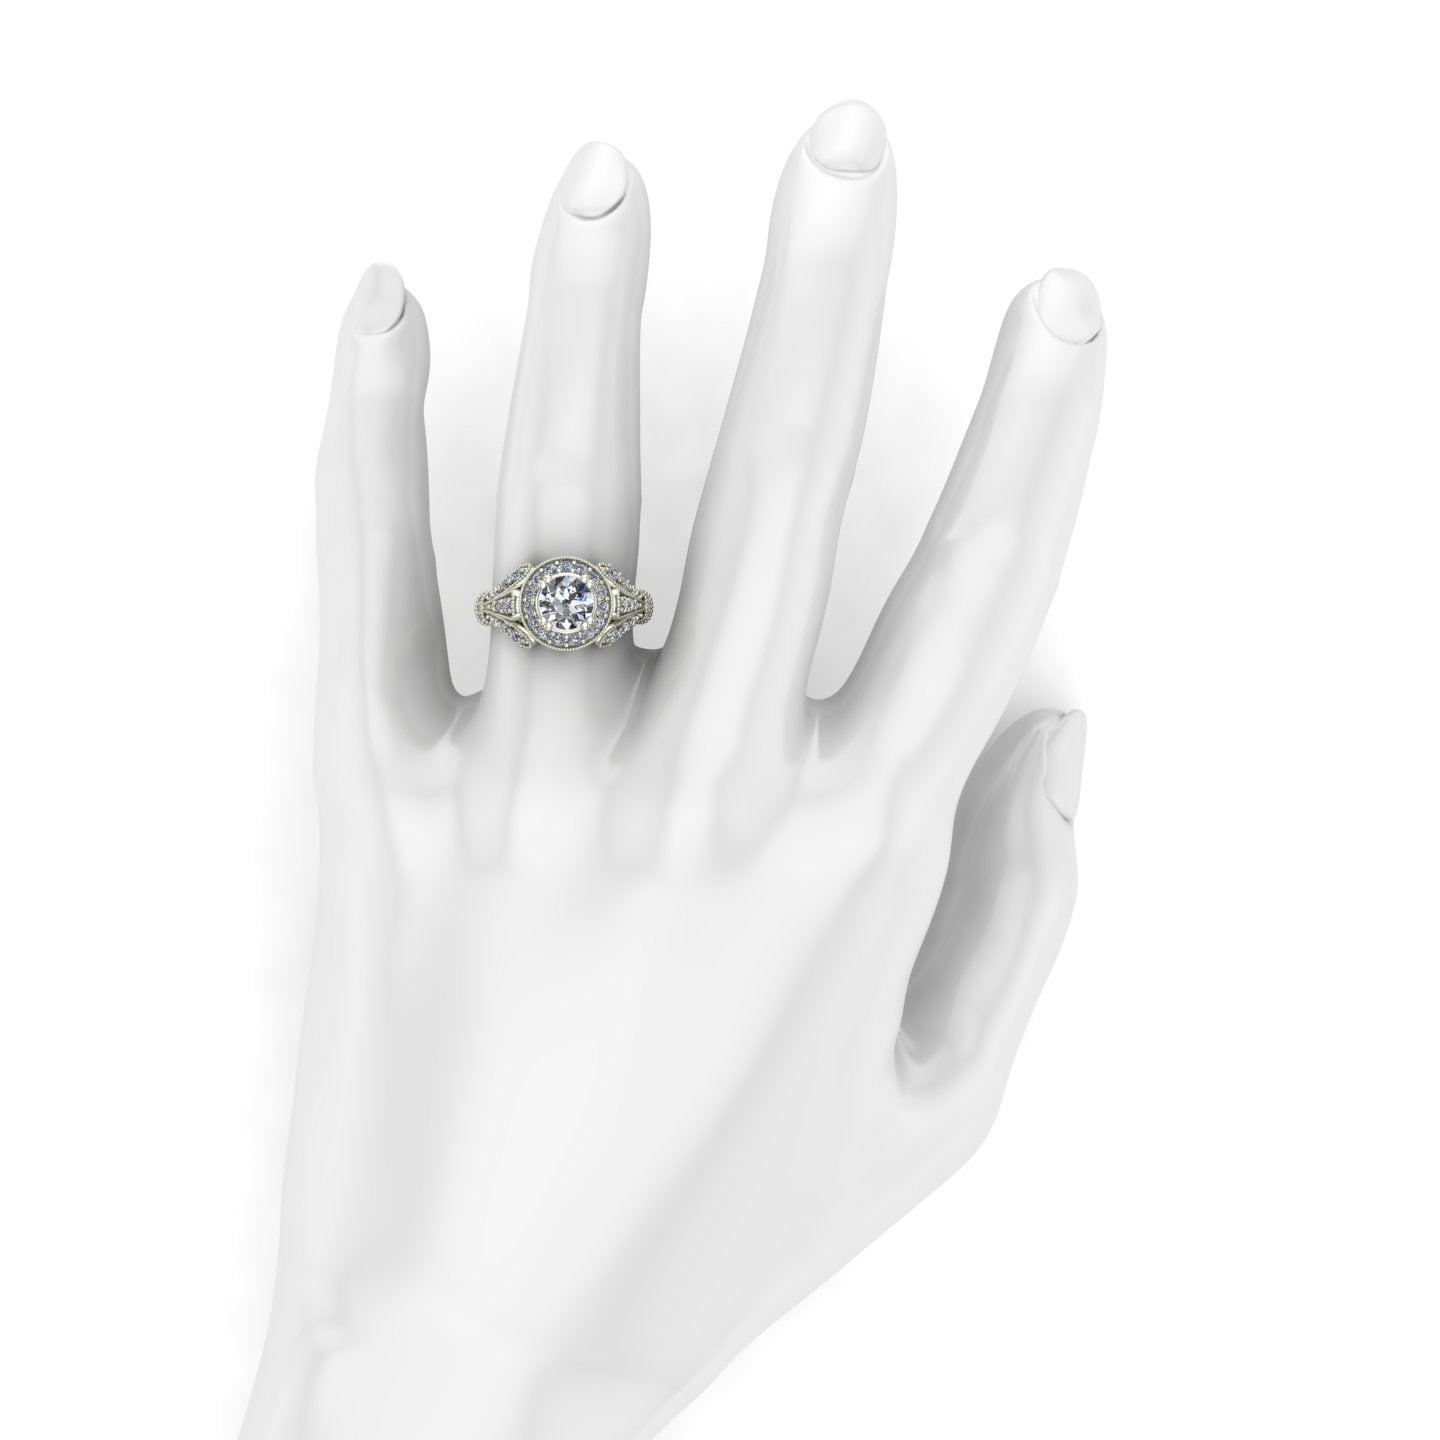 1ct Diamond halo fleur de lis engagement ring in 18k white gold - Charles Babb Designs - on hand